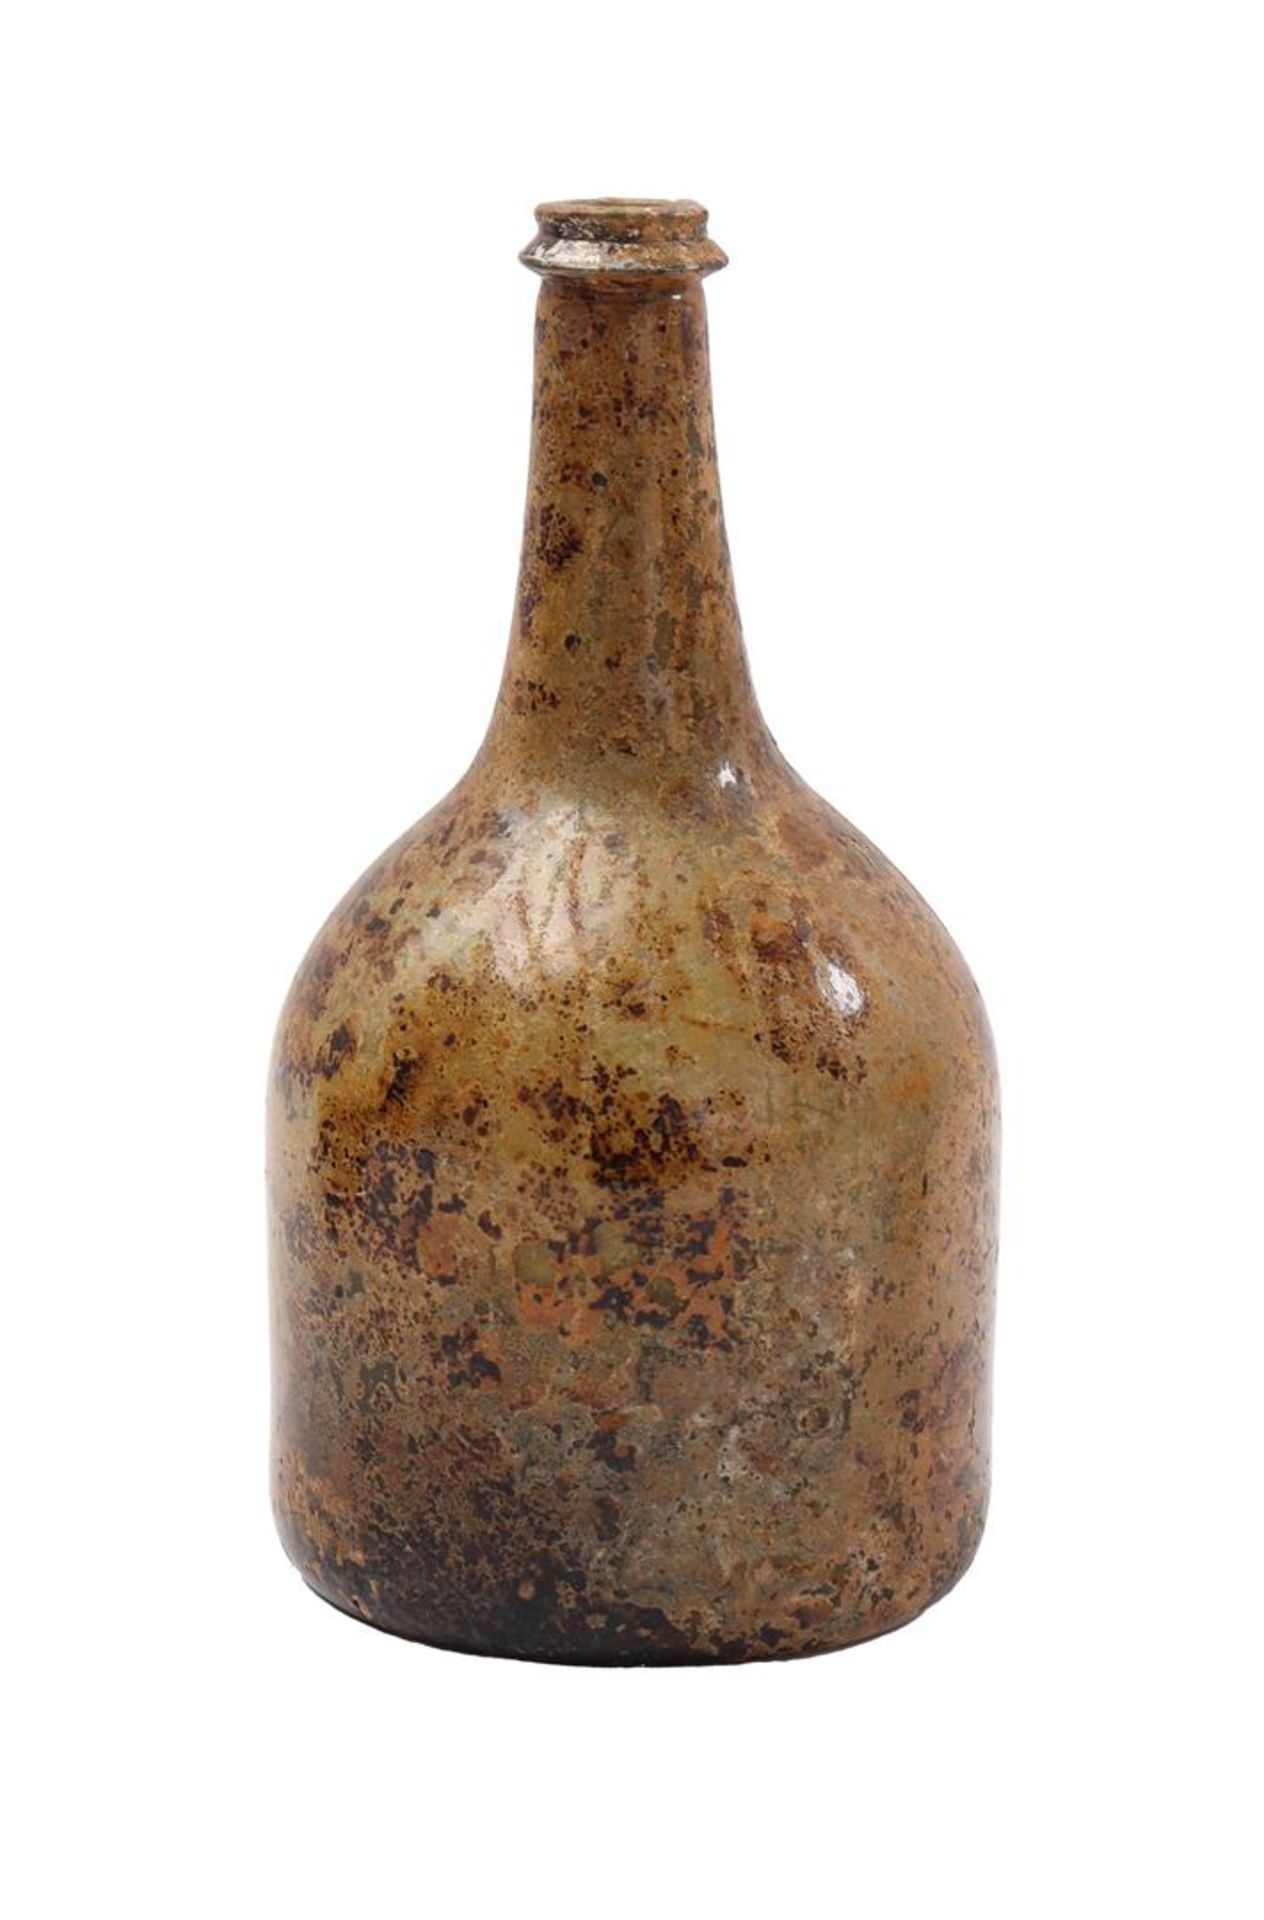 A green-brown glass bottle